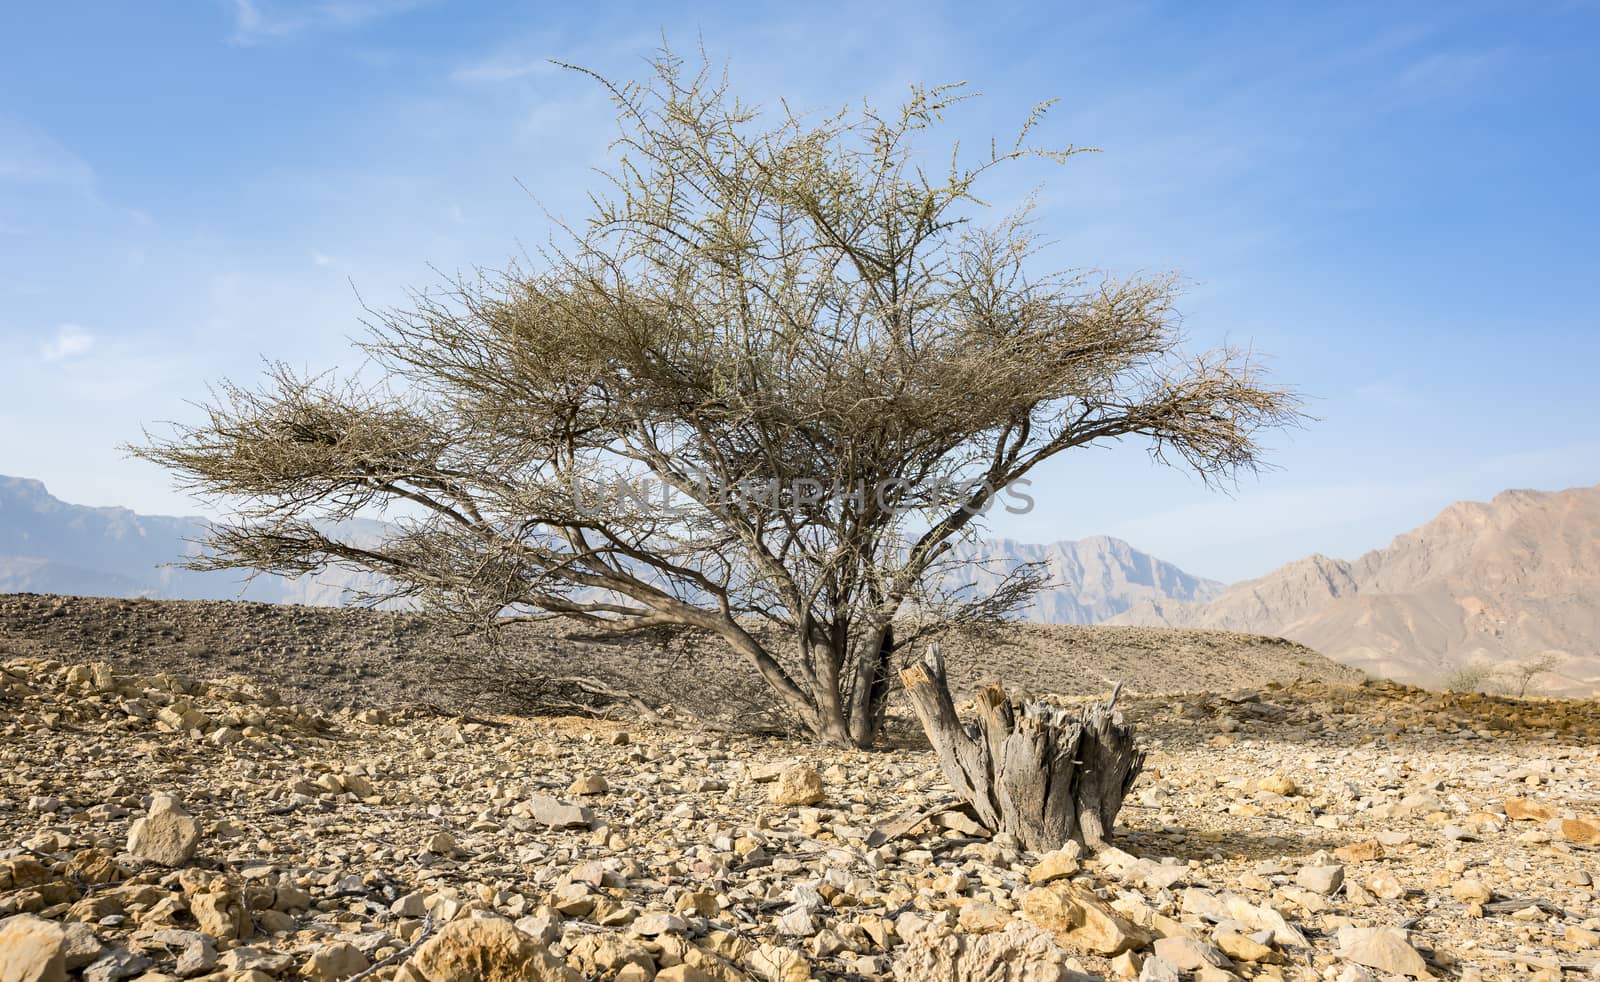 Acacia Tree between rocks in a Wadi near Wadi Dayqah Dam in the Sultanate of Oman.